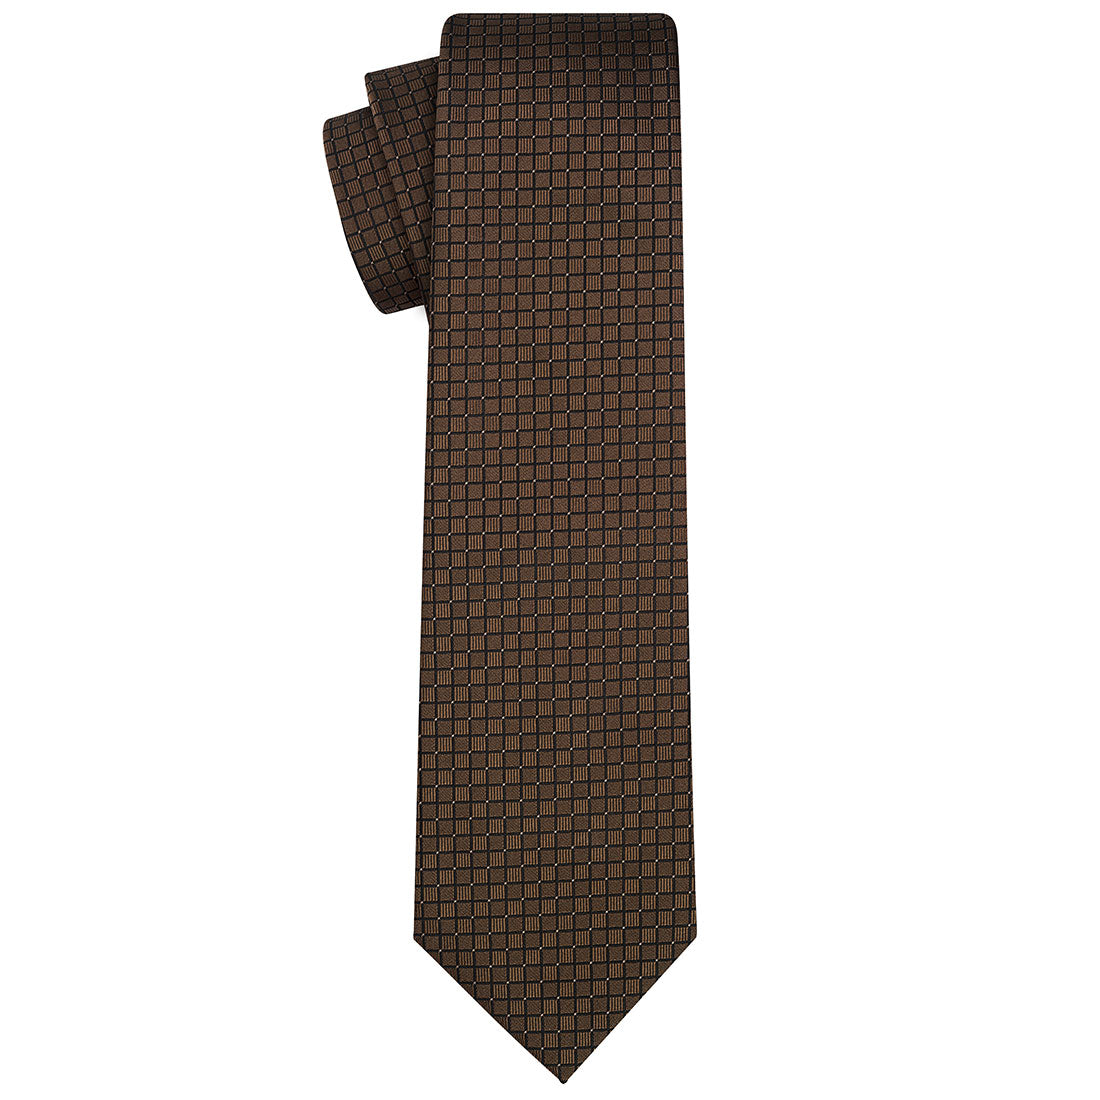 Chocolate Truffle Checkered Tie - Tie, bowtie, pocket square  | Kissties